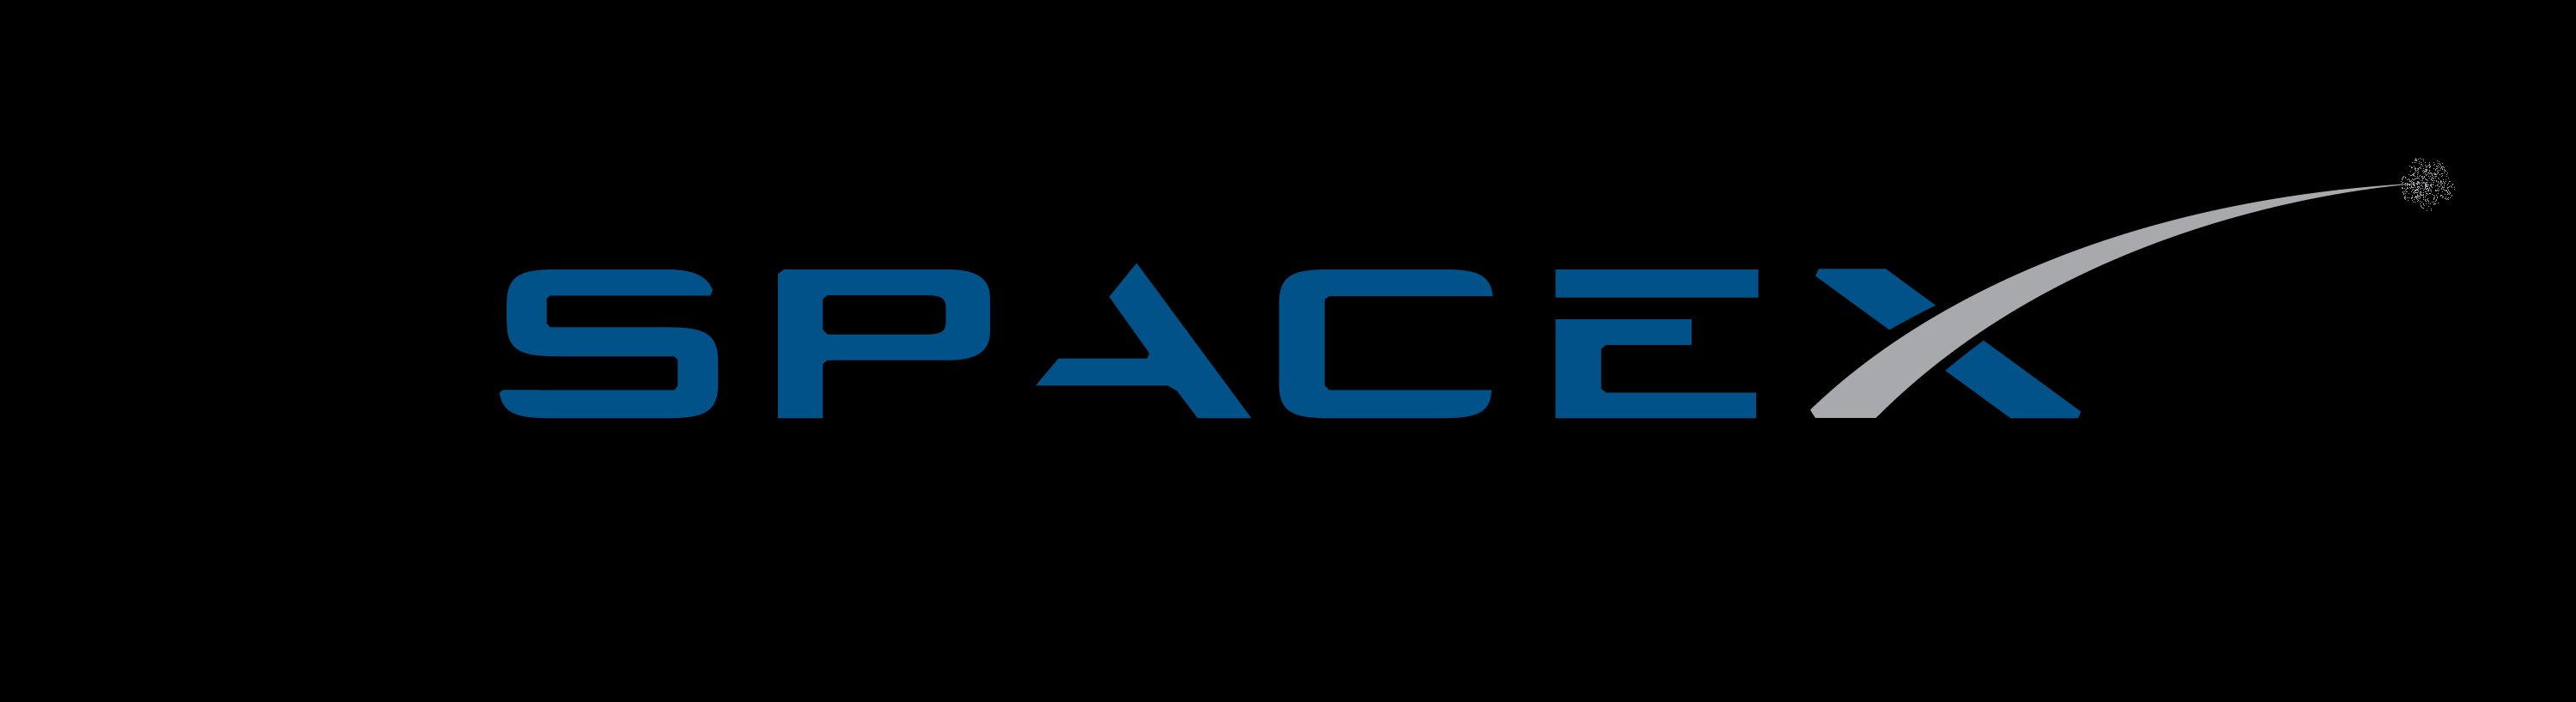 SpaceX X Logo - SpaceX Logo corrected - Imgur